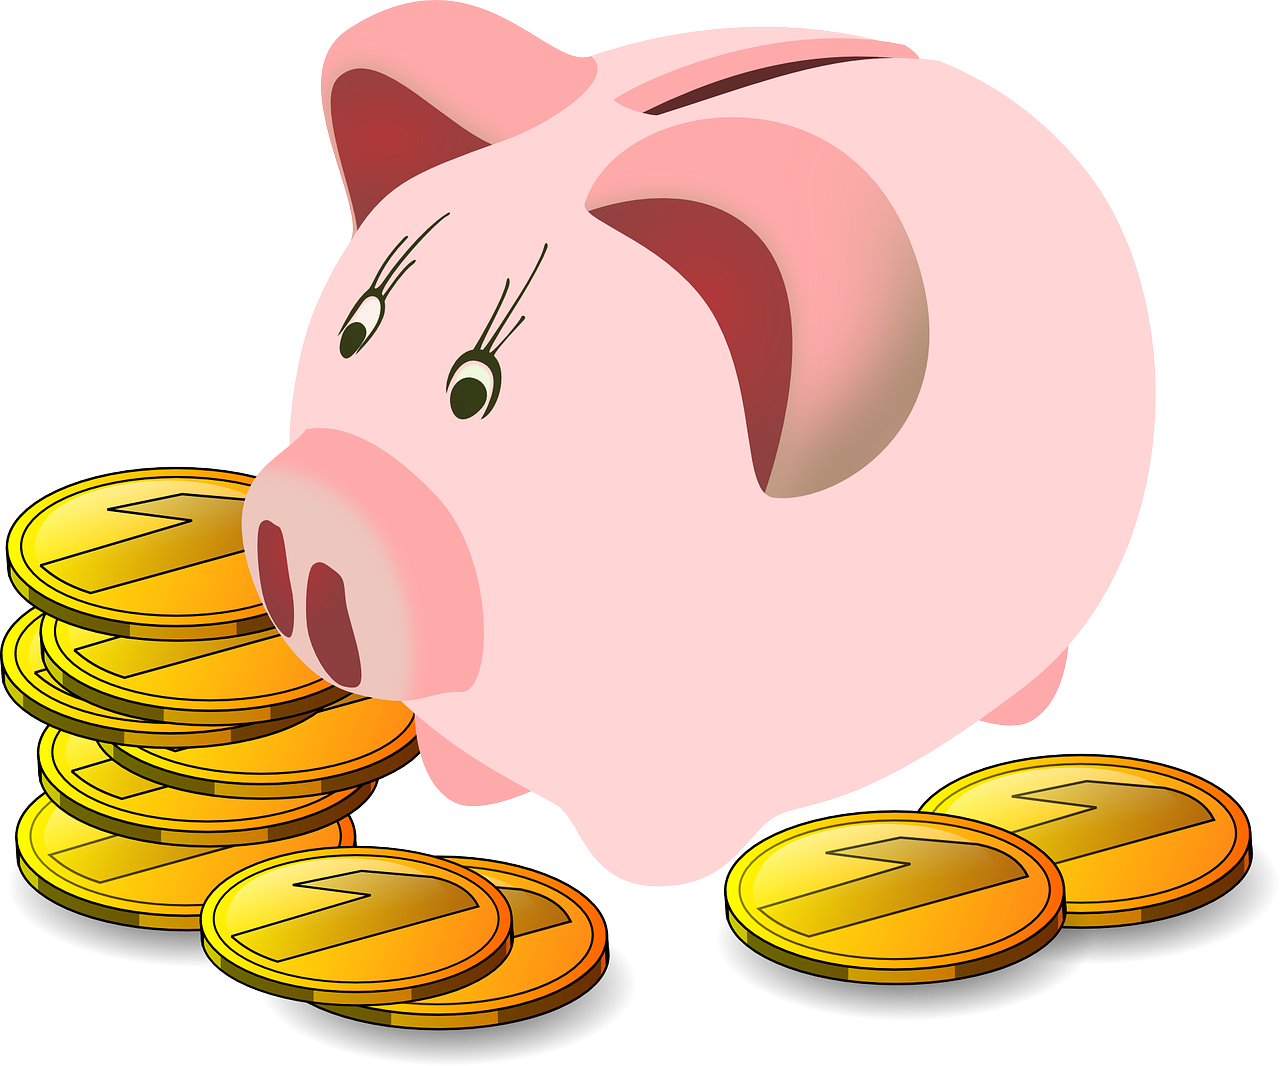 Savings box,pig,piggy bank,money,savings - free image from needpix.com